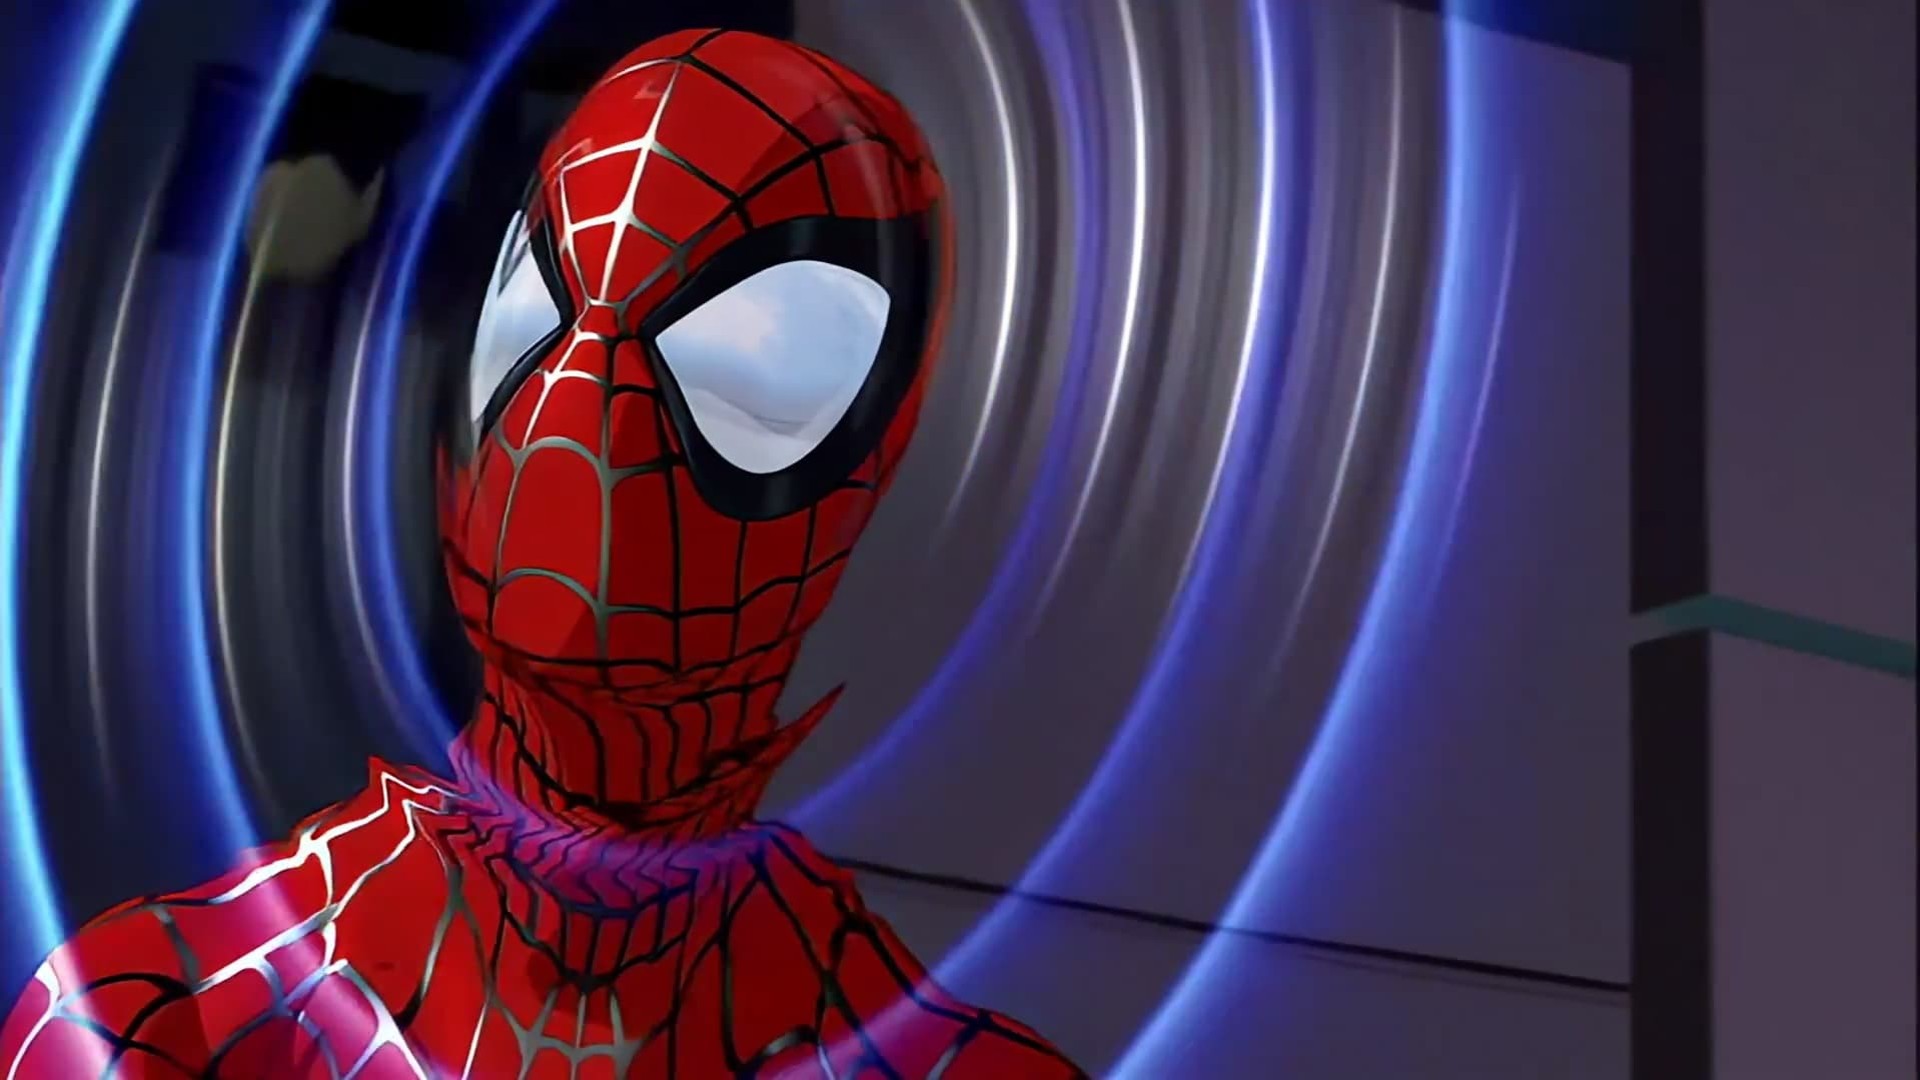 Download Marvel Desktop Spiderman Animated Wallpaper | Wallpapers.com